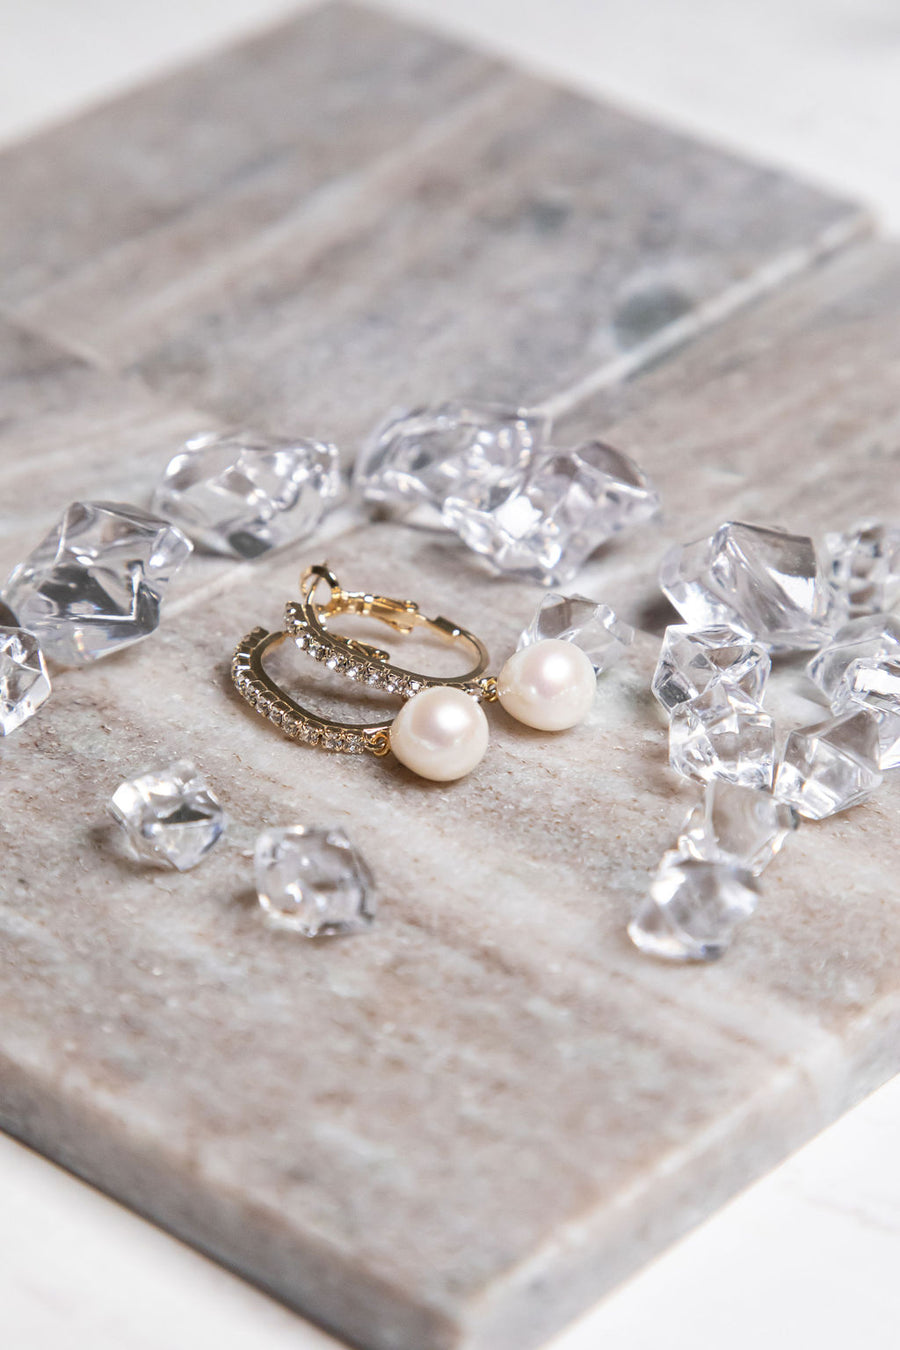 Genuine Gold Pearl Drop Sparkly Hoop Earrings ~ High Quality Pearls & Cubic Zirconia